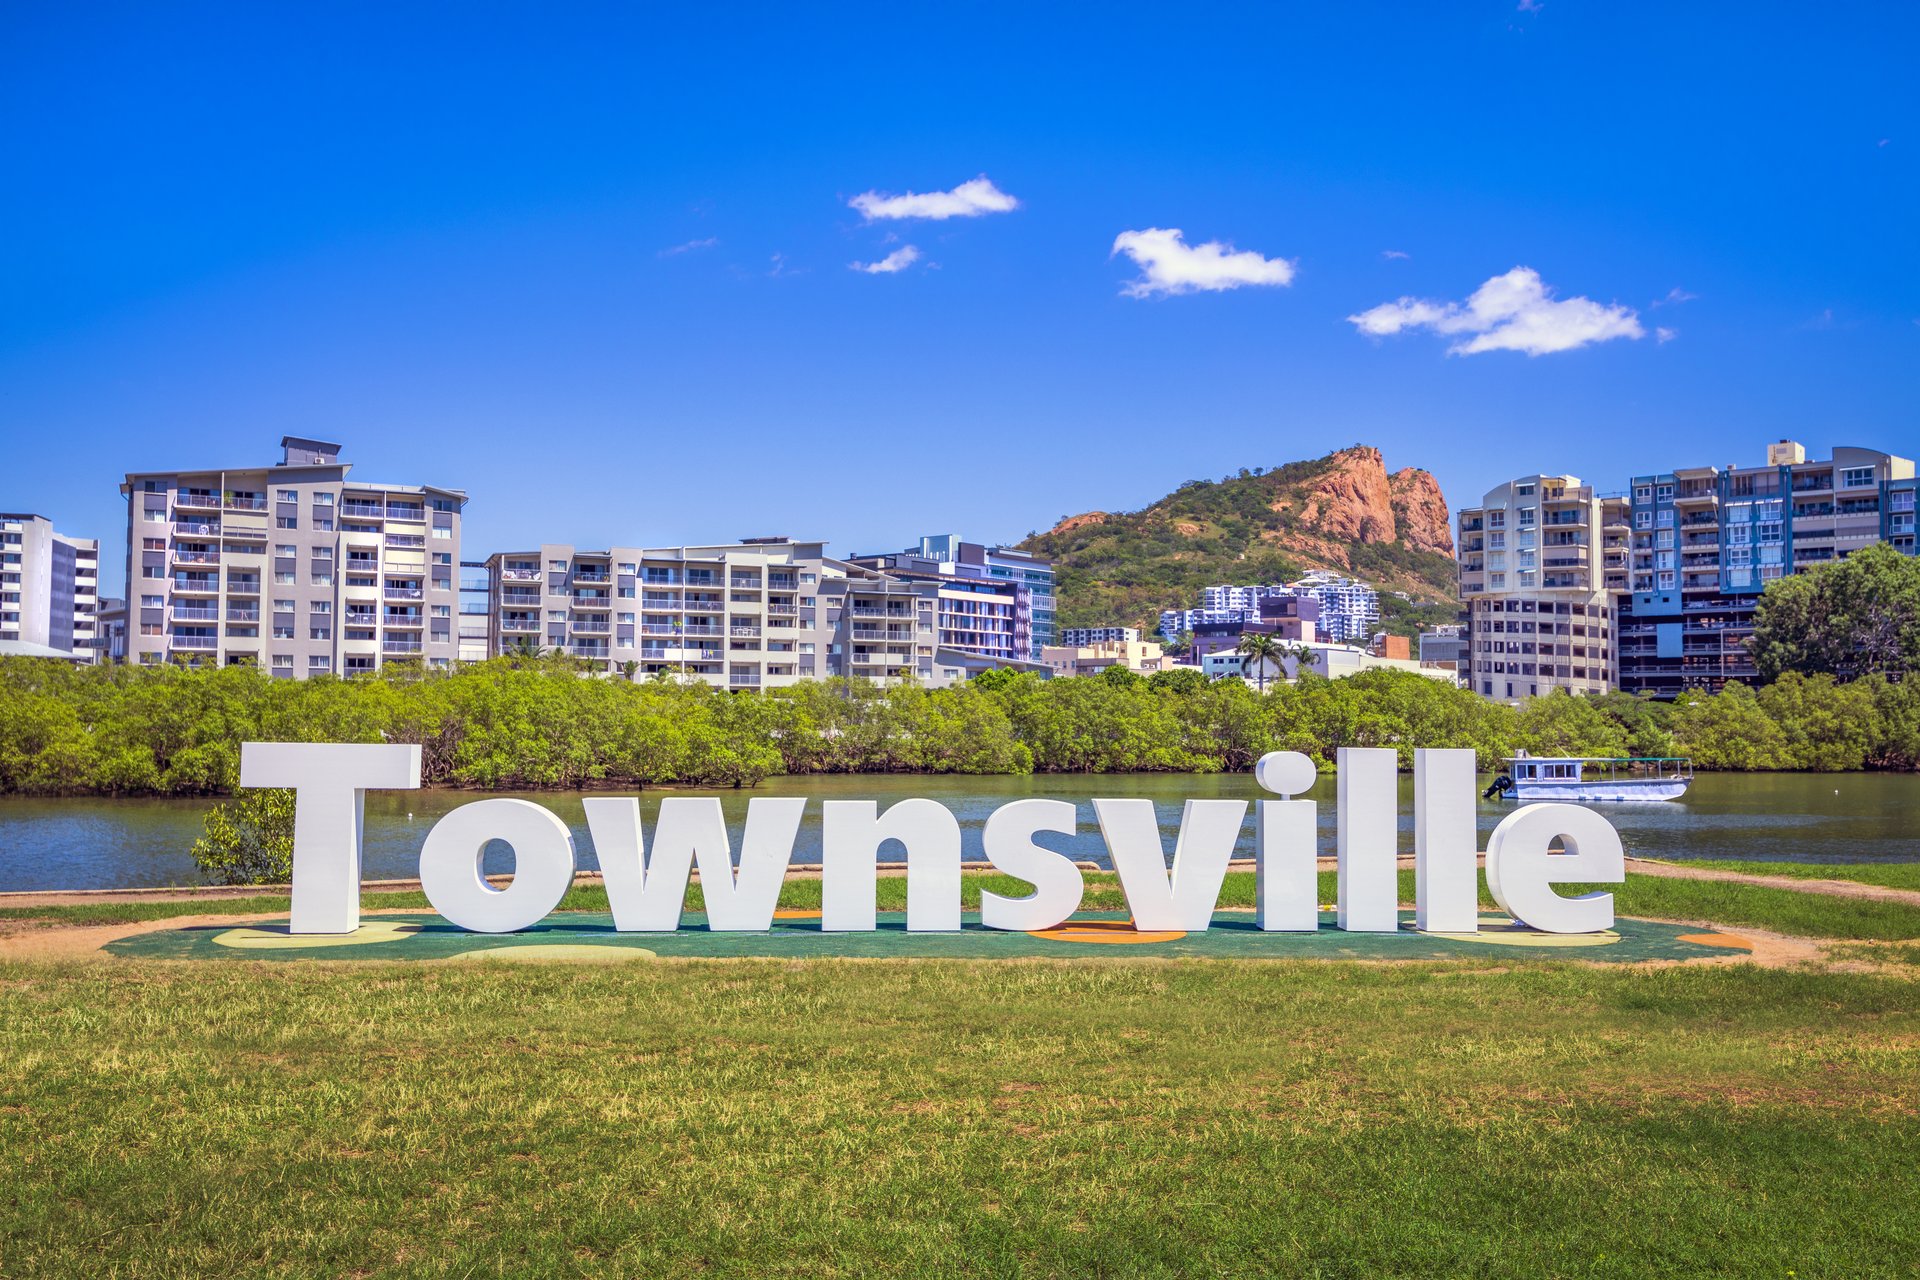 Townsville world cancer day